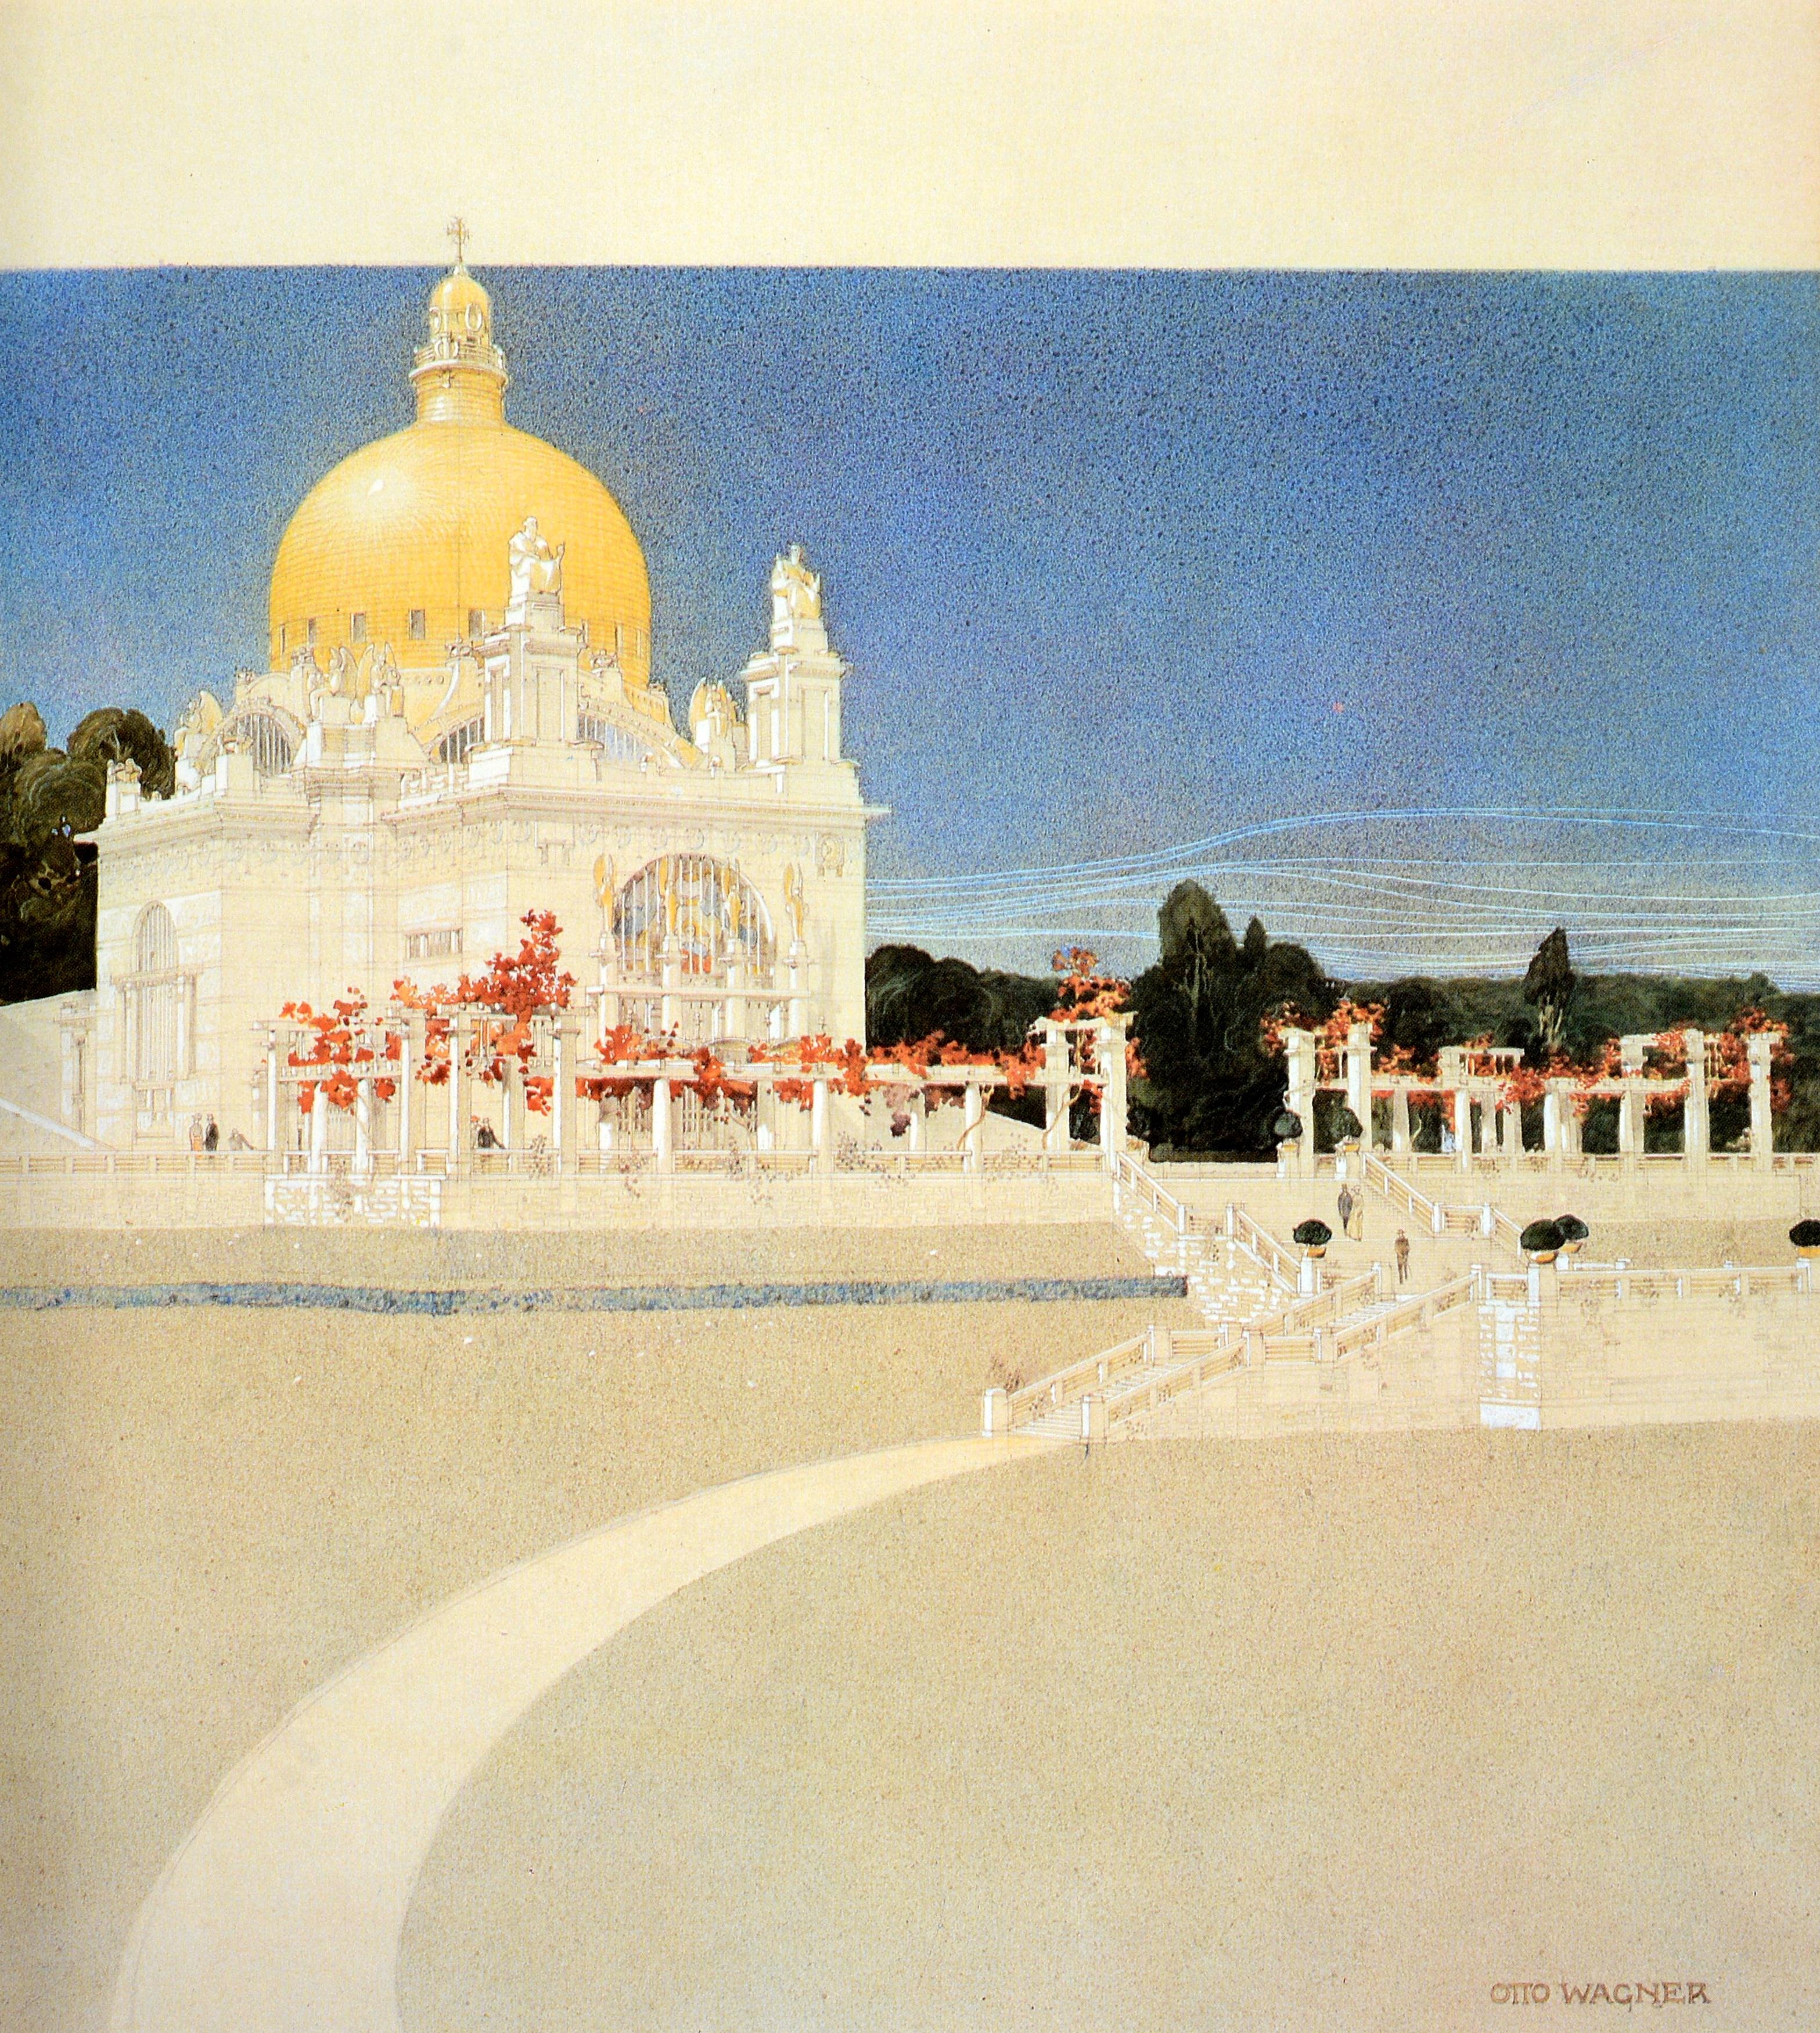 Vienna 1900: Art, Architecture & Design by Kirk Varnedoe, 1st Ed 1